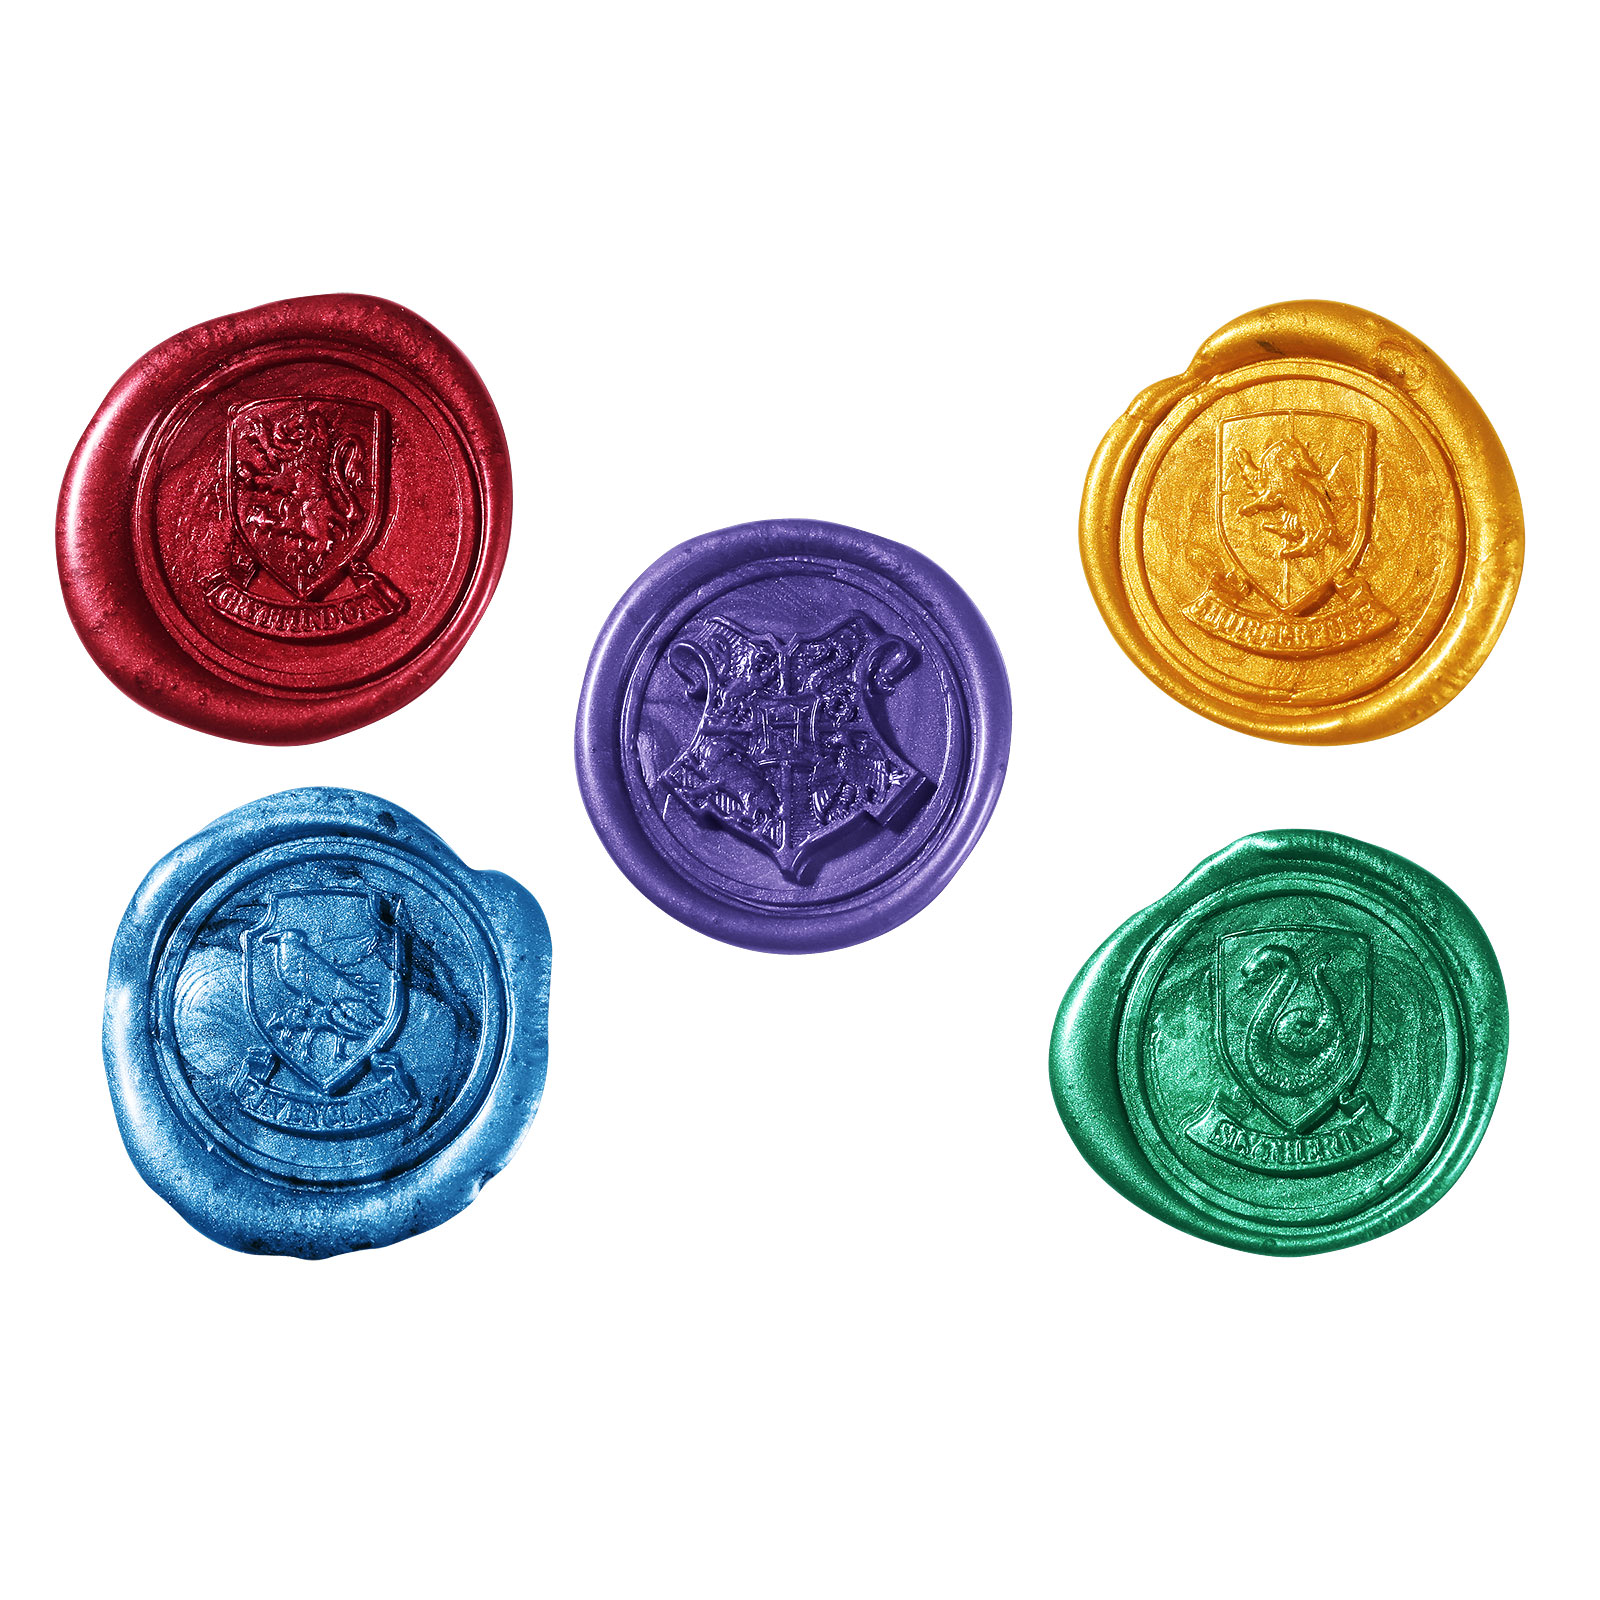 Jahrgang Harry Potter Hogwarts Wappen Wachssiegel Set mit 2 Farbe Wachskerzen 